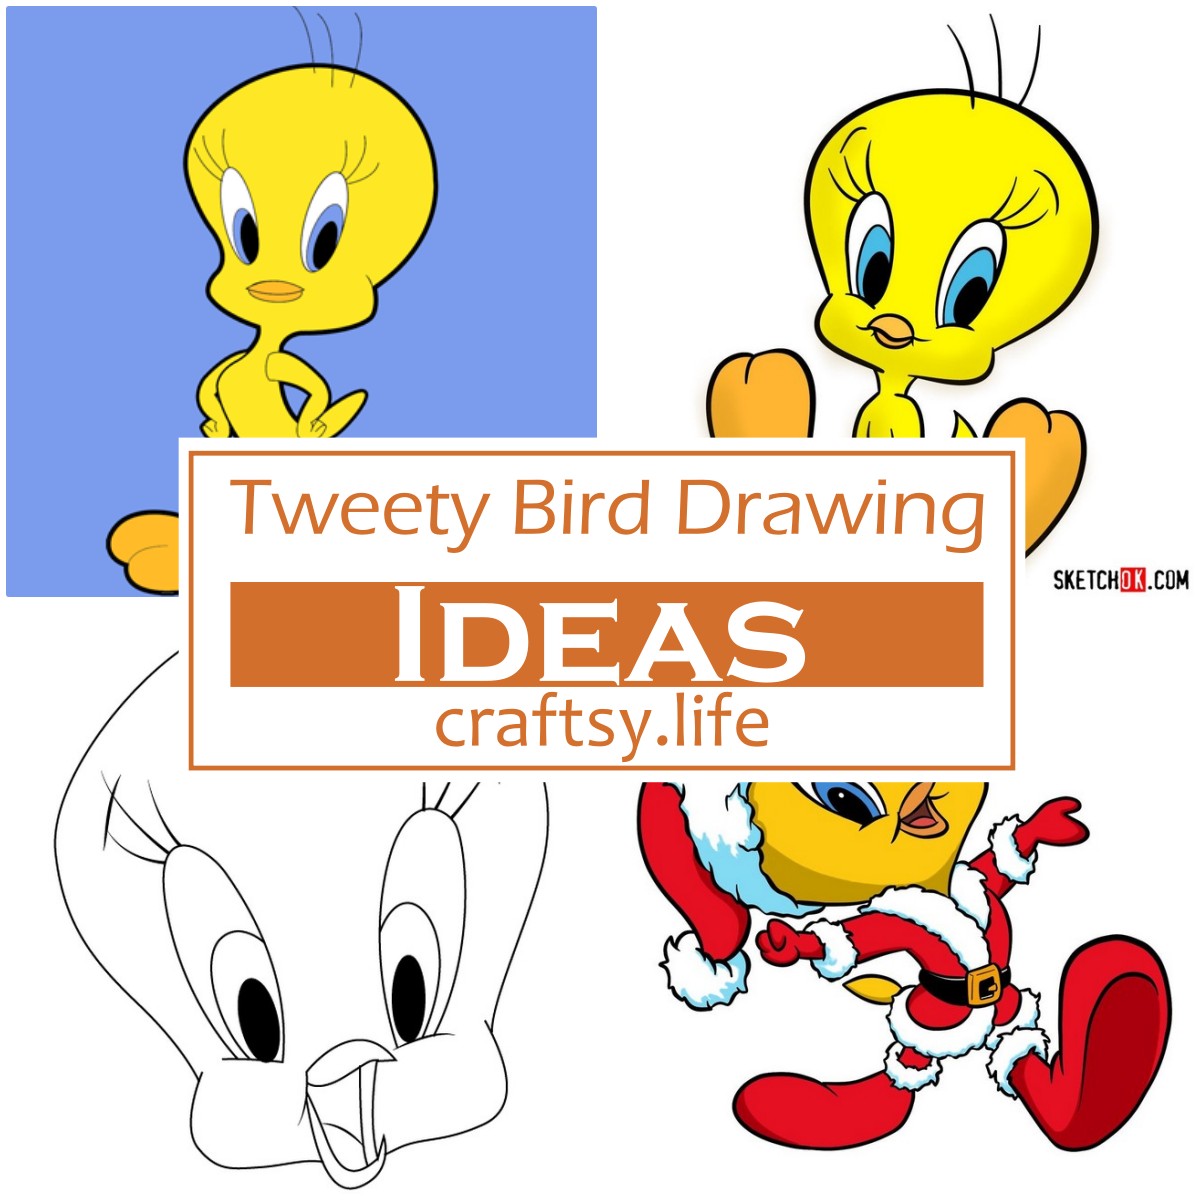 Tweety Bird Drawing Ideas 1